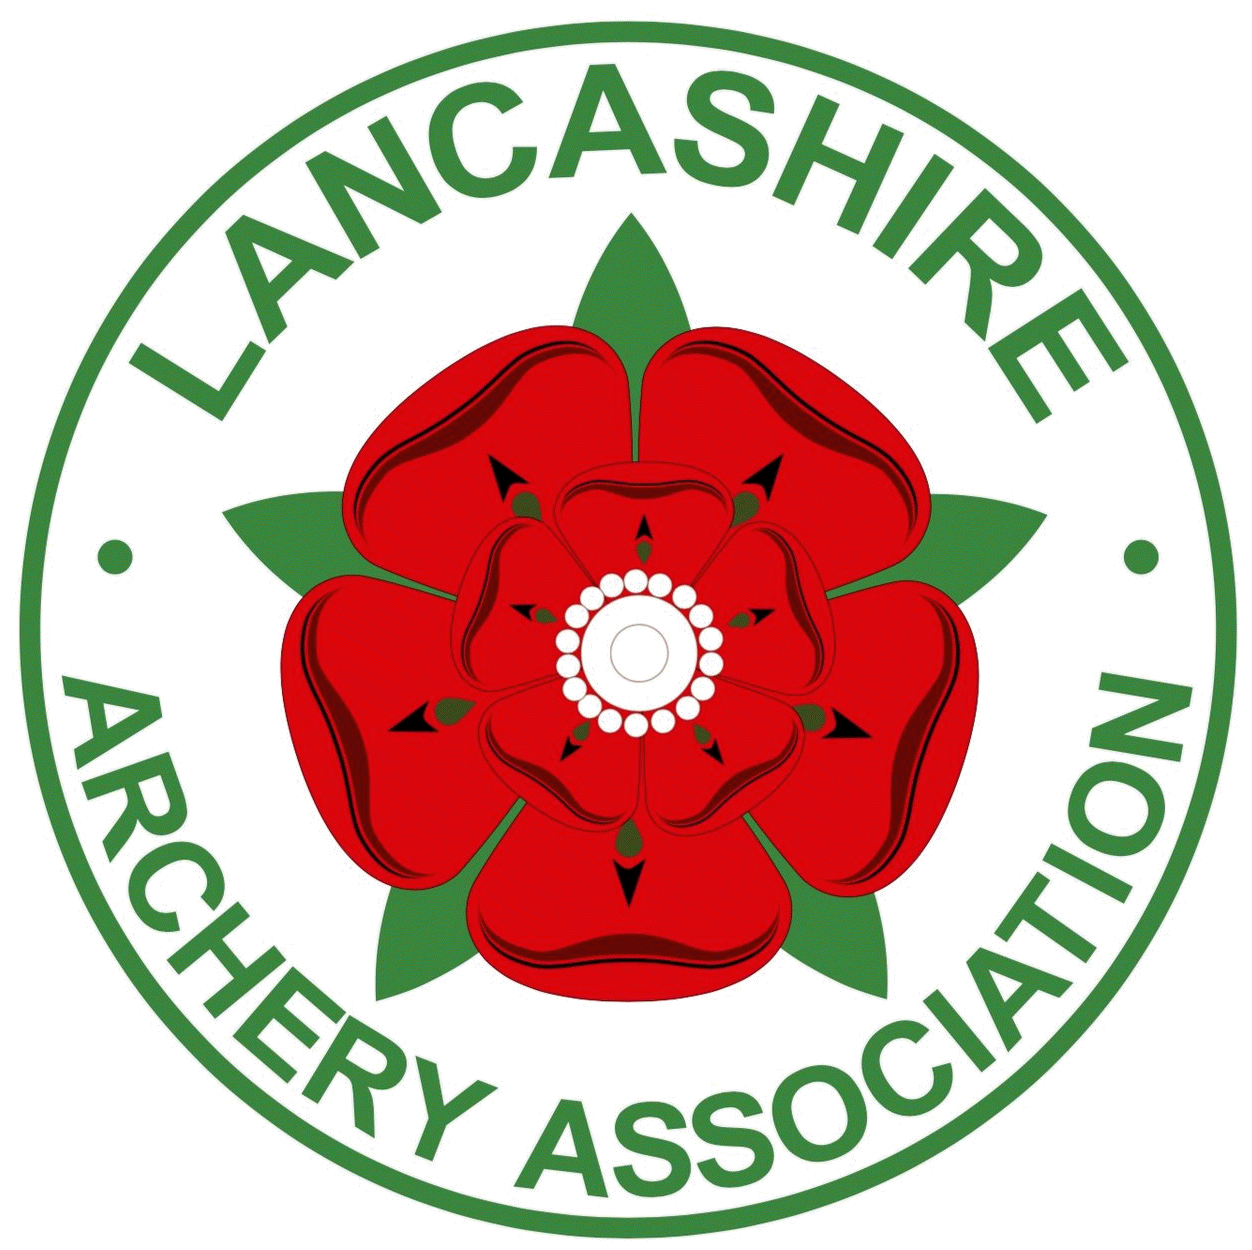 The Lancashire Archery Association